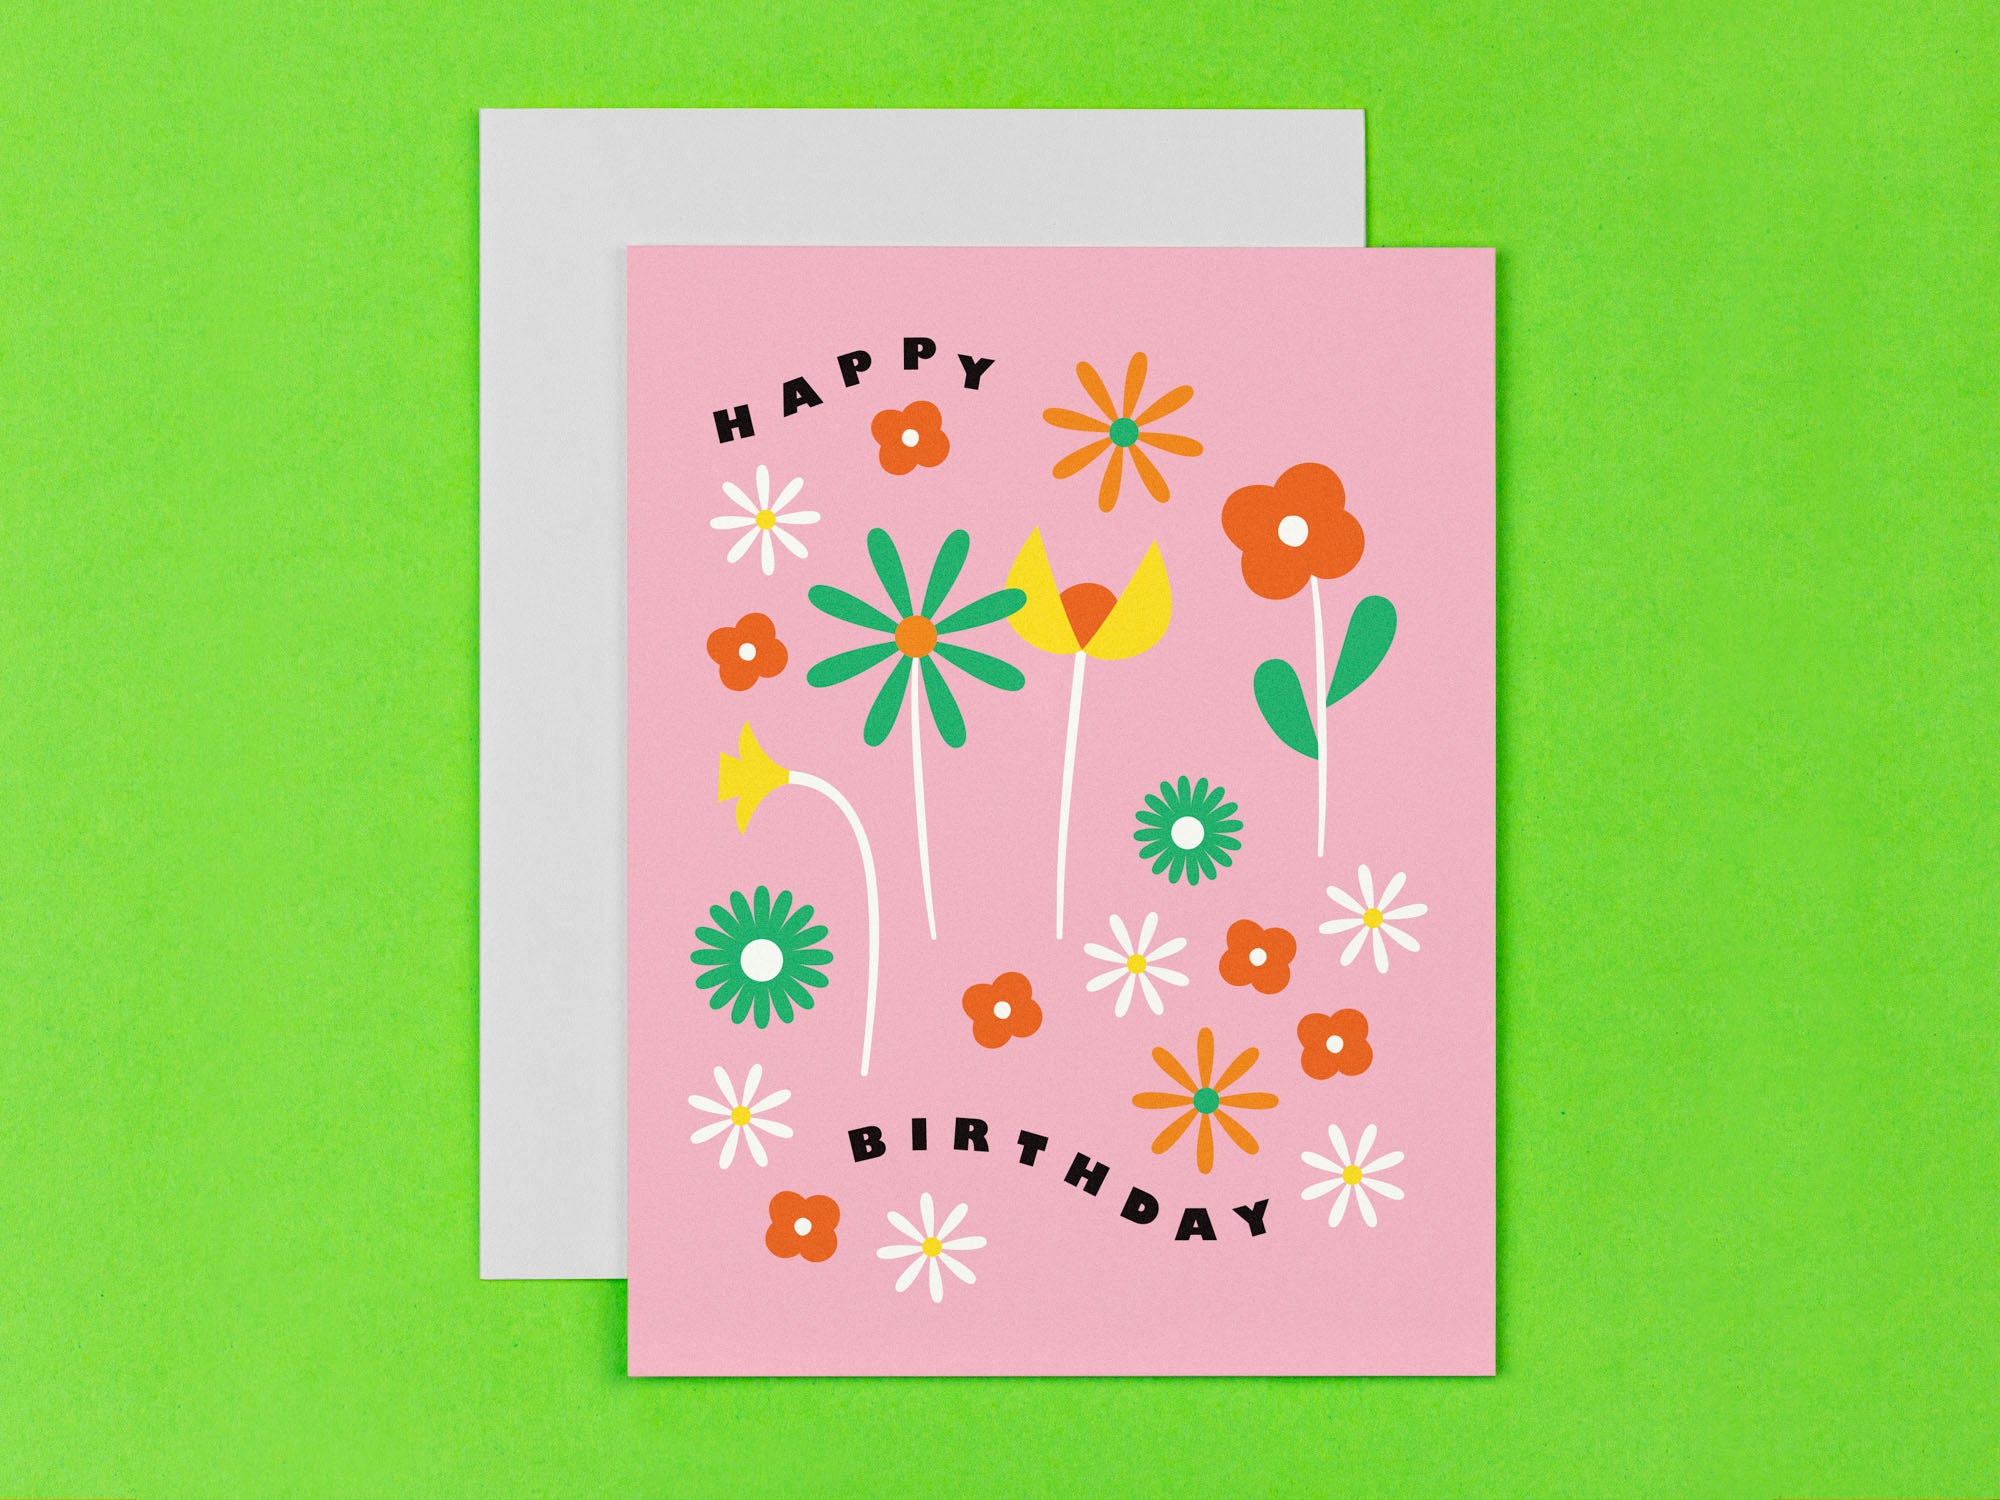 Handmade floral birthday greeting card- Floral birthday greeting card